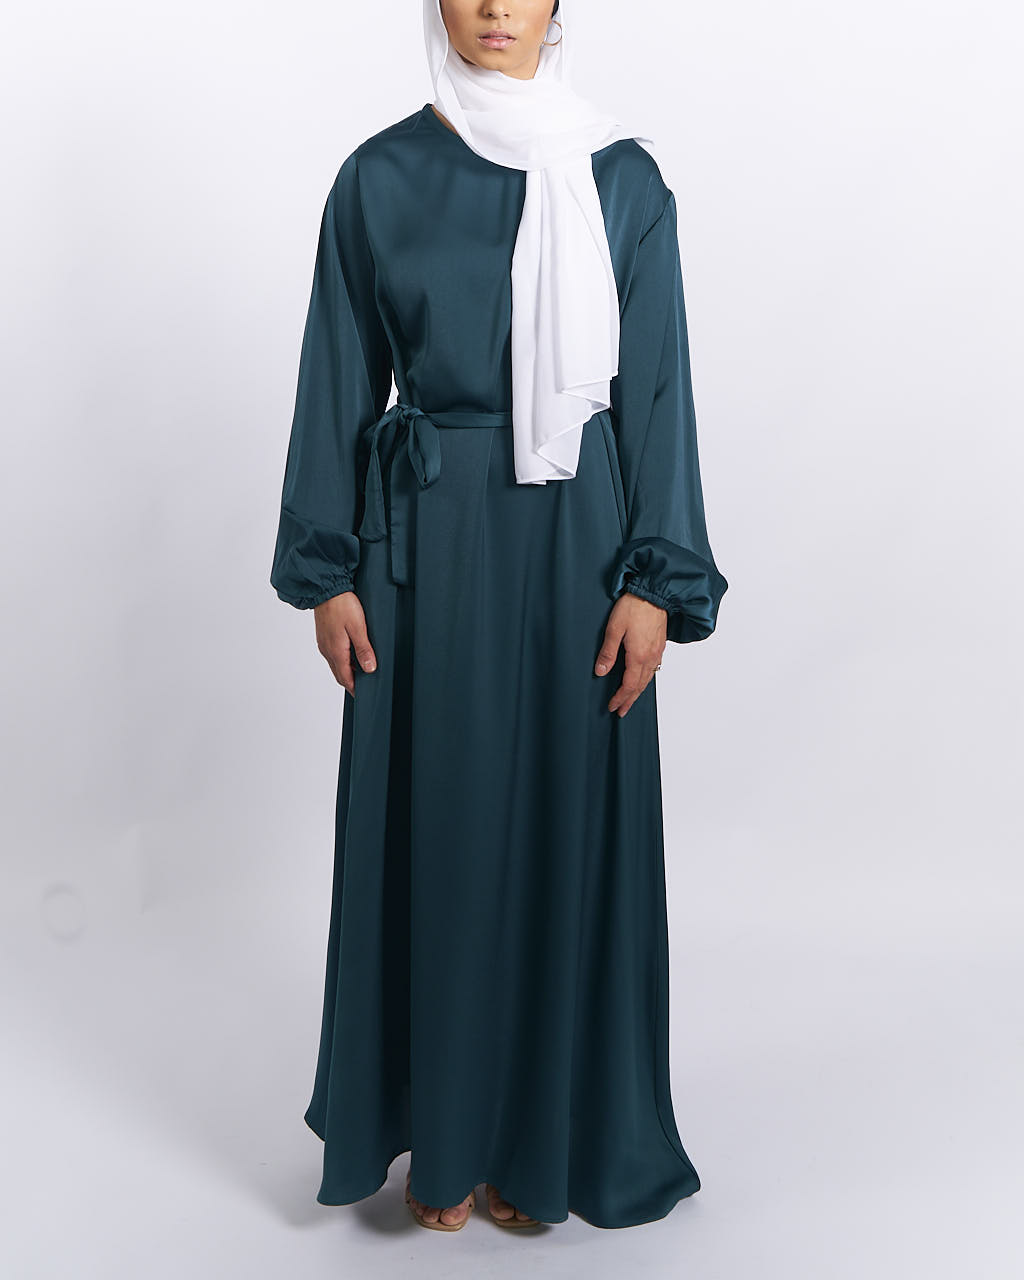 Jannah Cuffed Abaya - Emerald - Closed Abaya - Fajr Noor